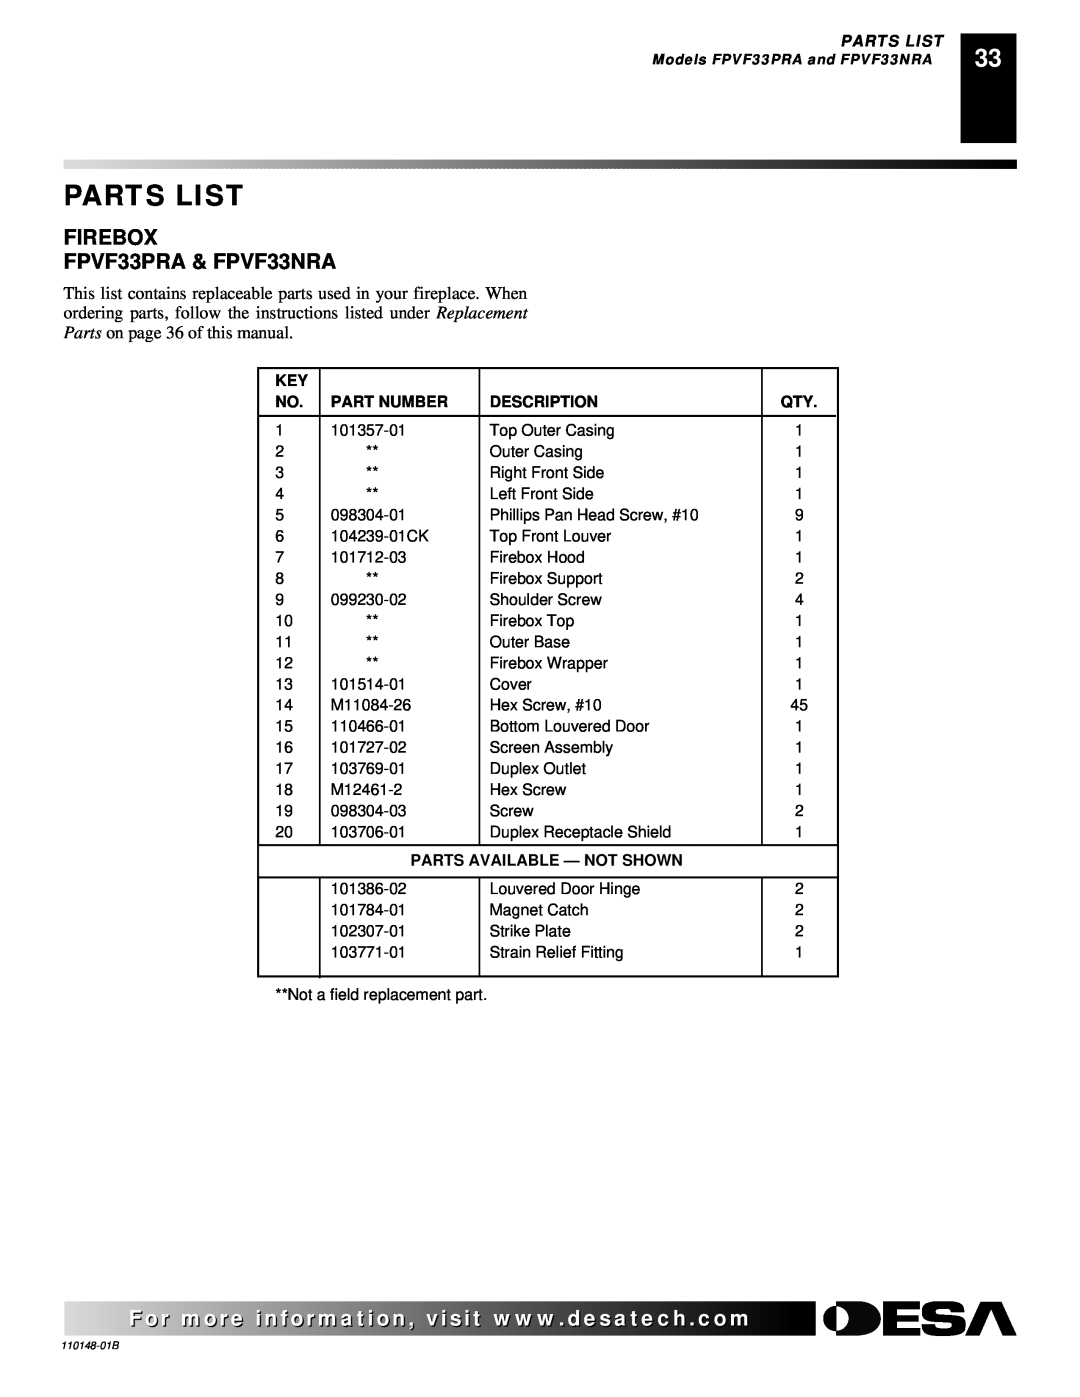 Desa YGF33PRB FIREBOX FPVF33PRA & FPVF33NRA, Parts List, Part Number, Description, Parts Available - Not Shown 